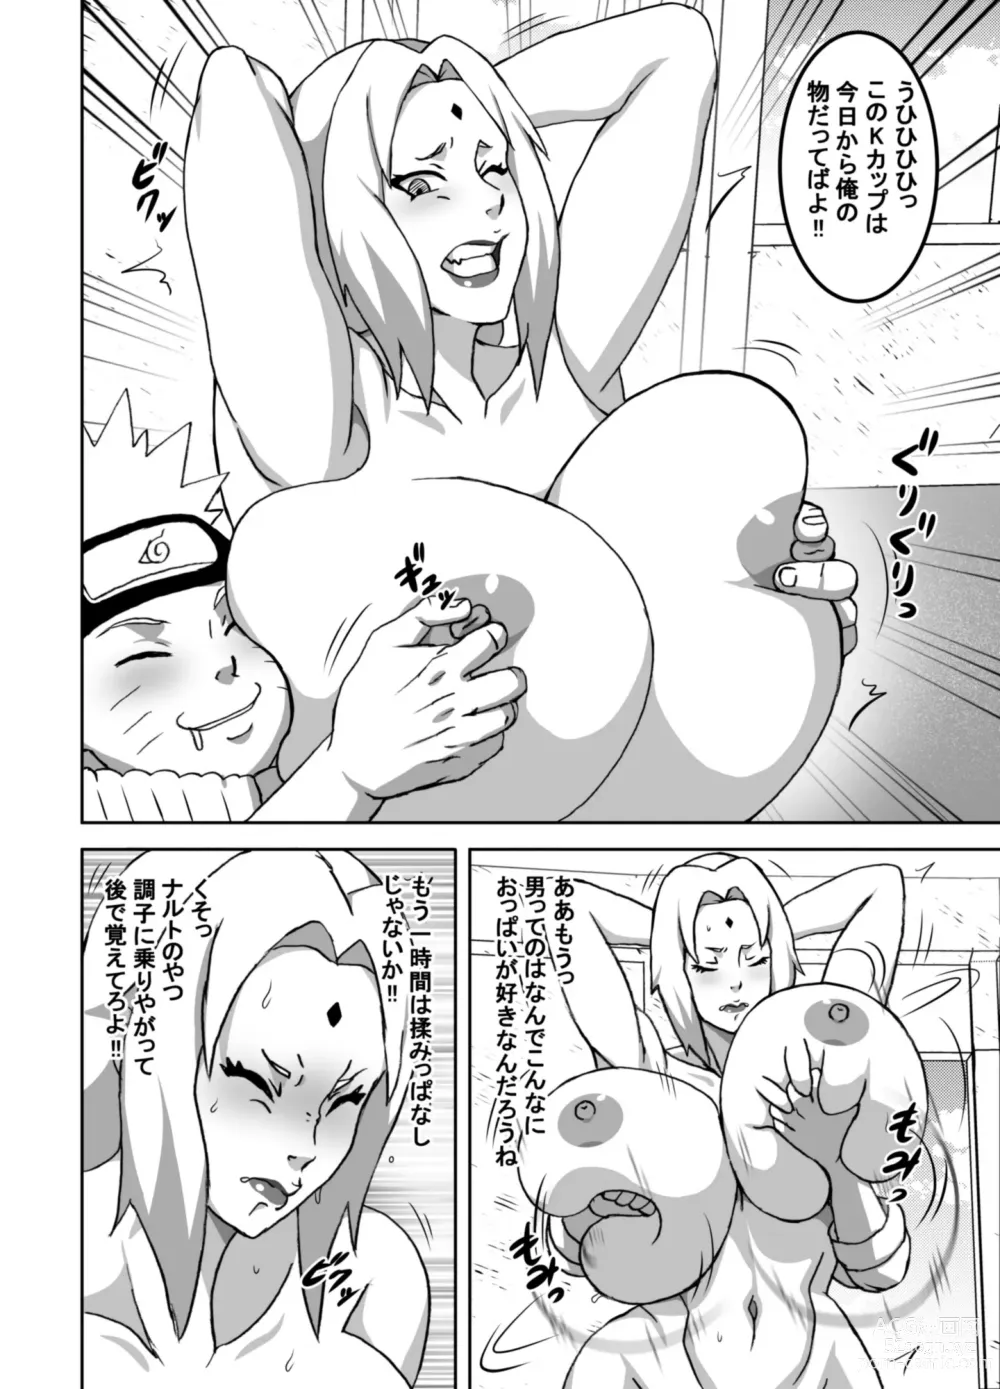 Page 10 of doujinshi Torotsuna